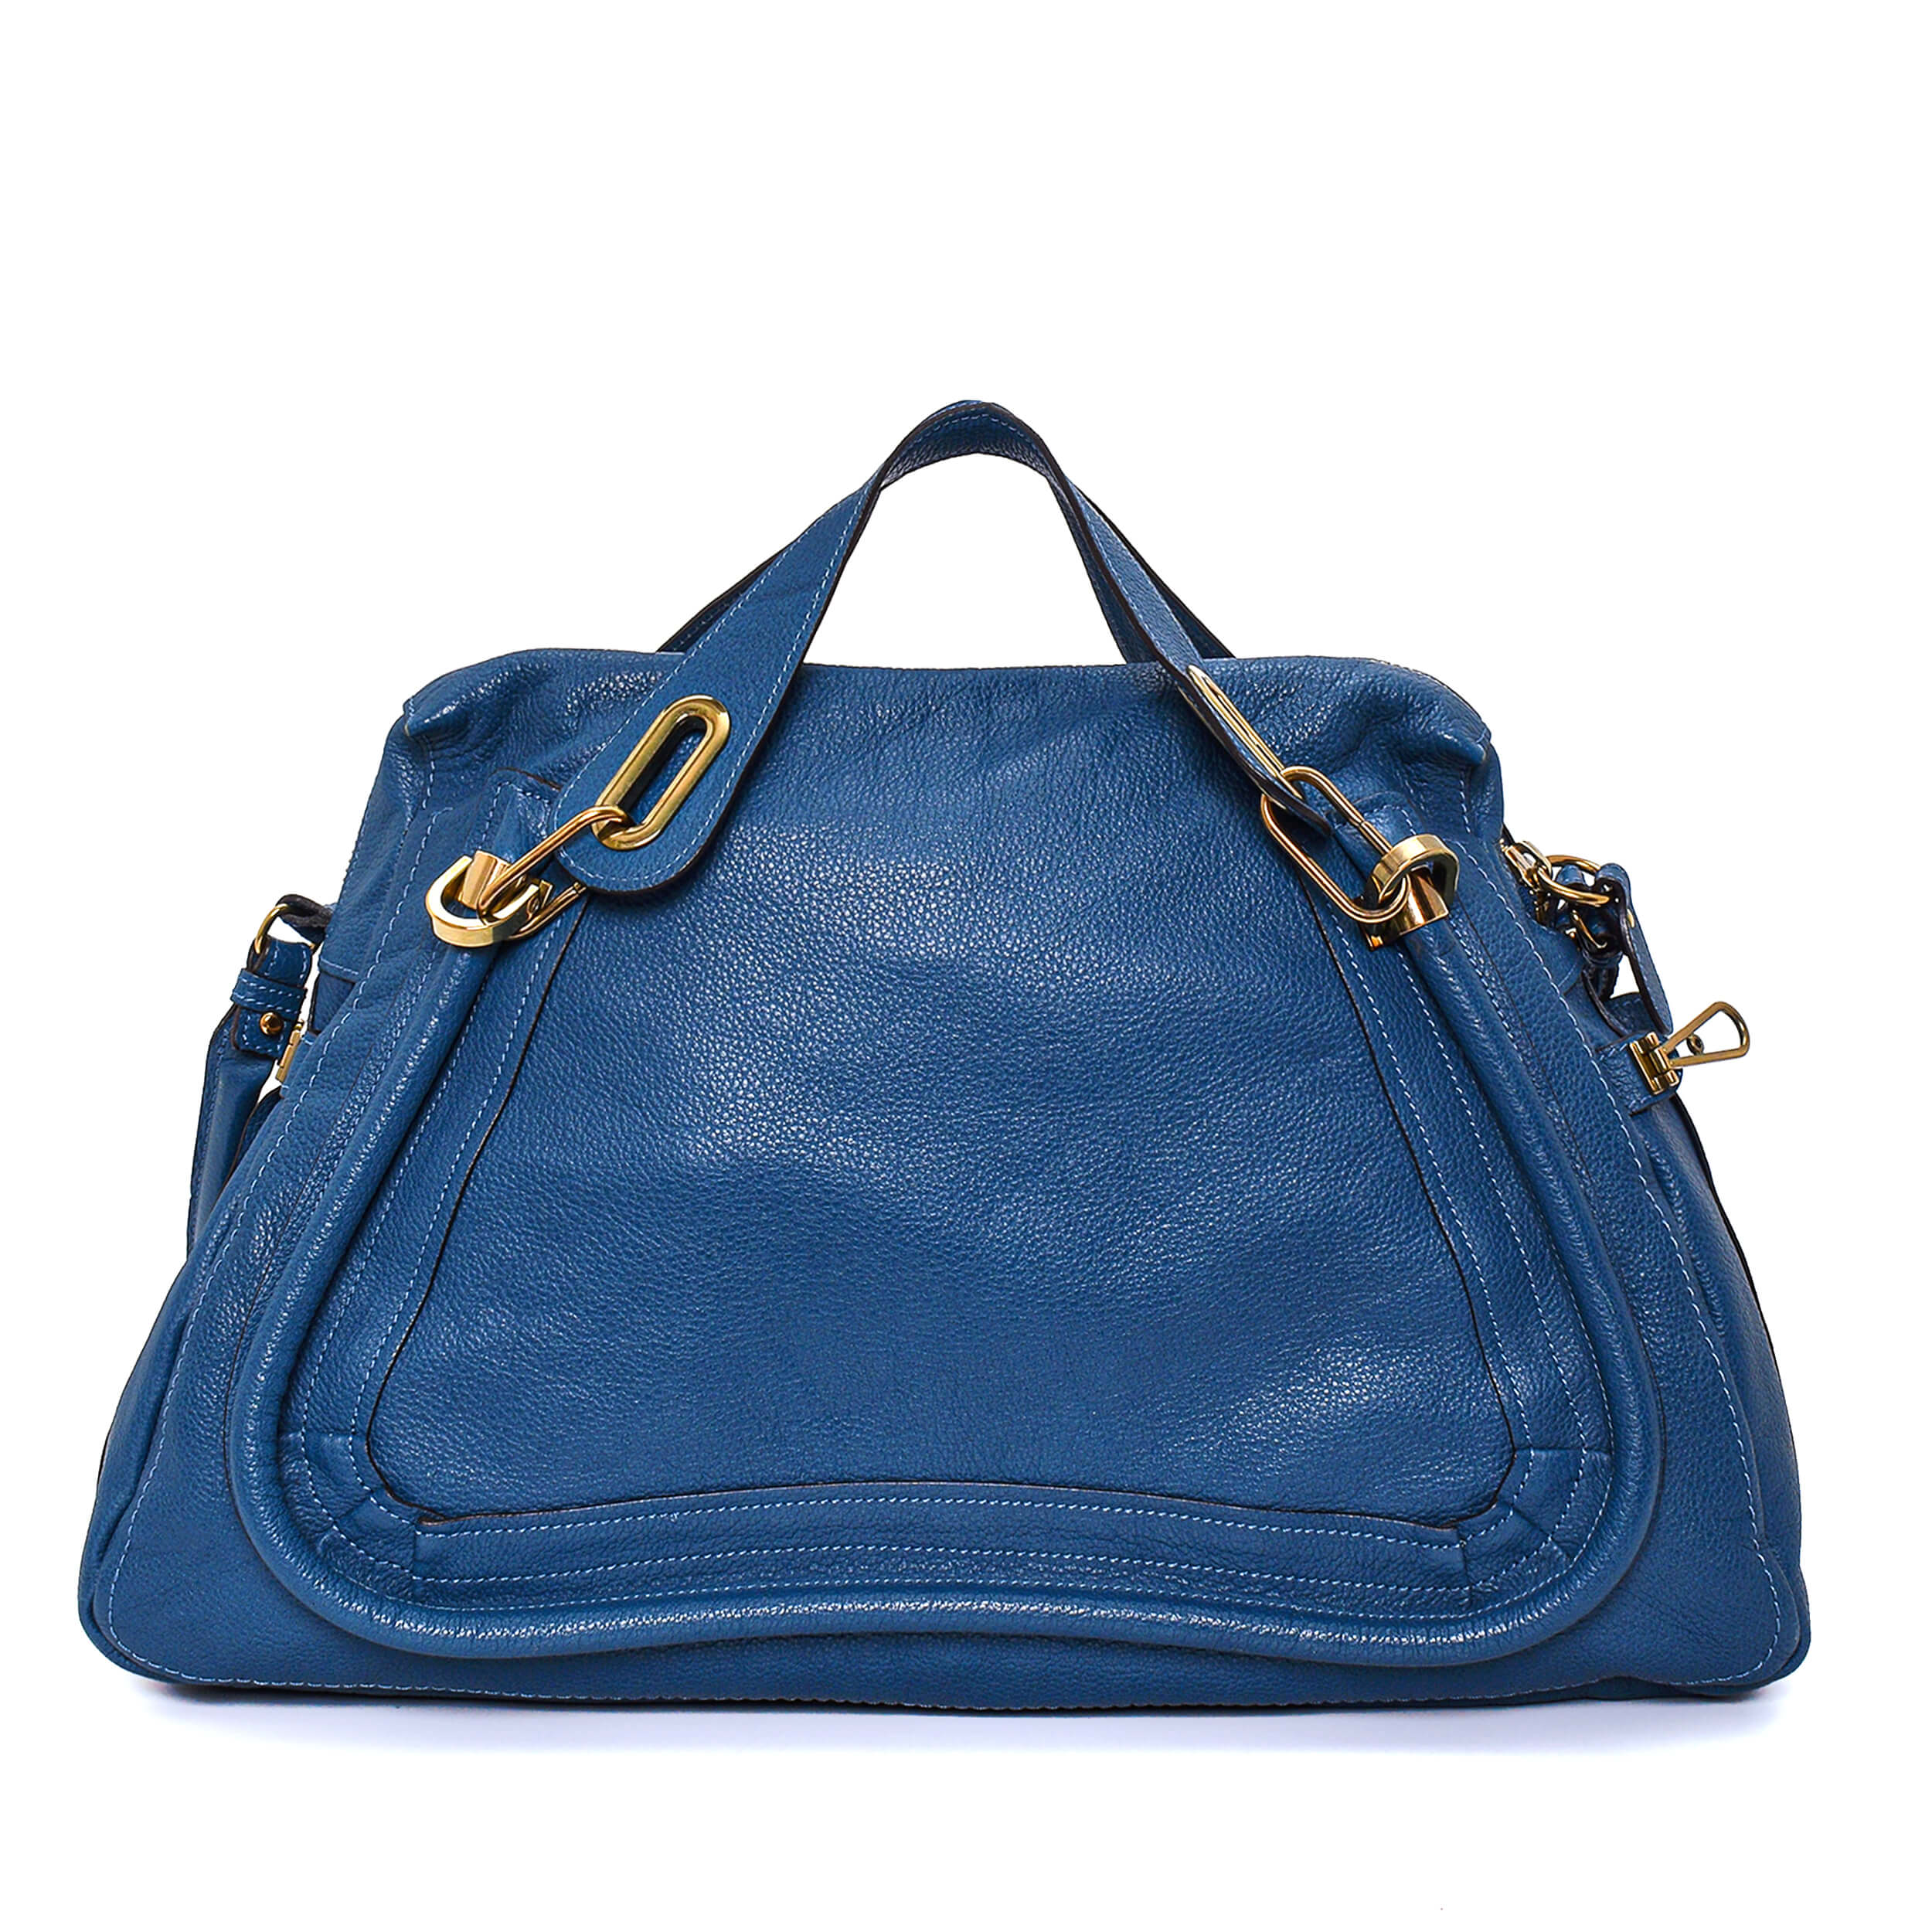 Chloe - Navy Blue Leather Large Paraty Bag